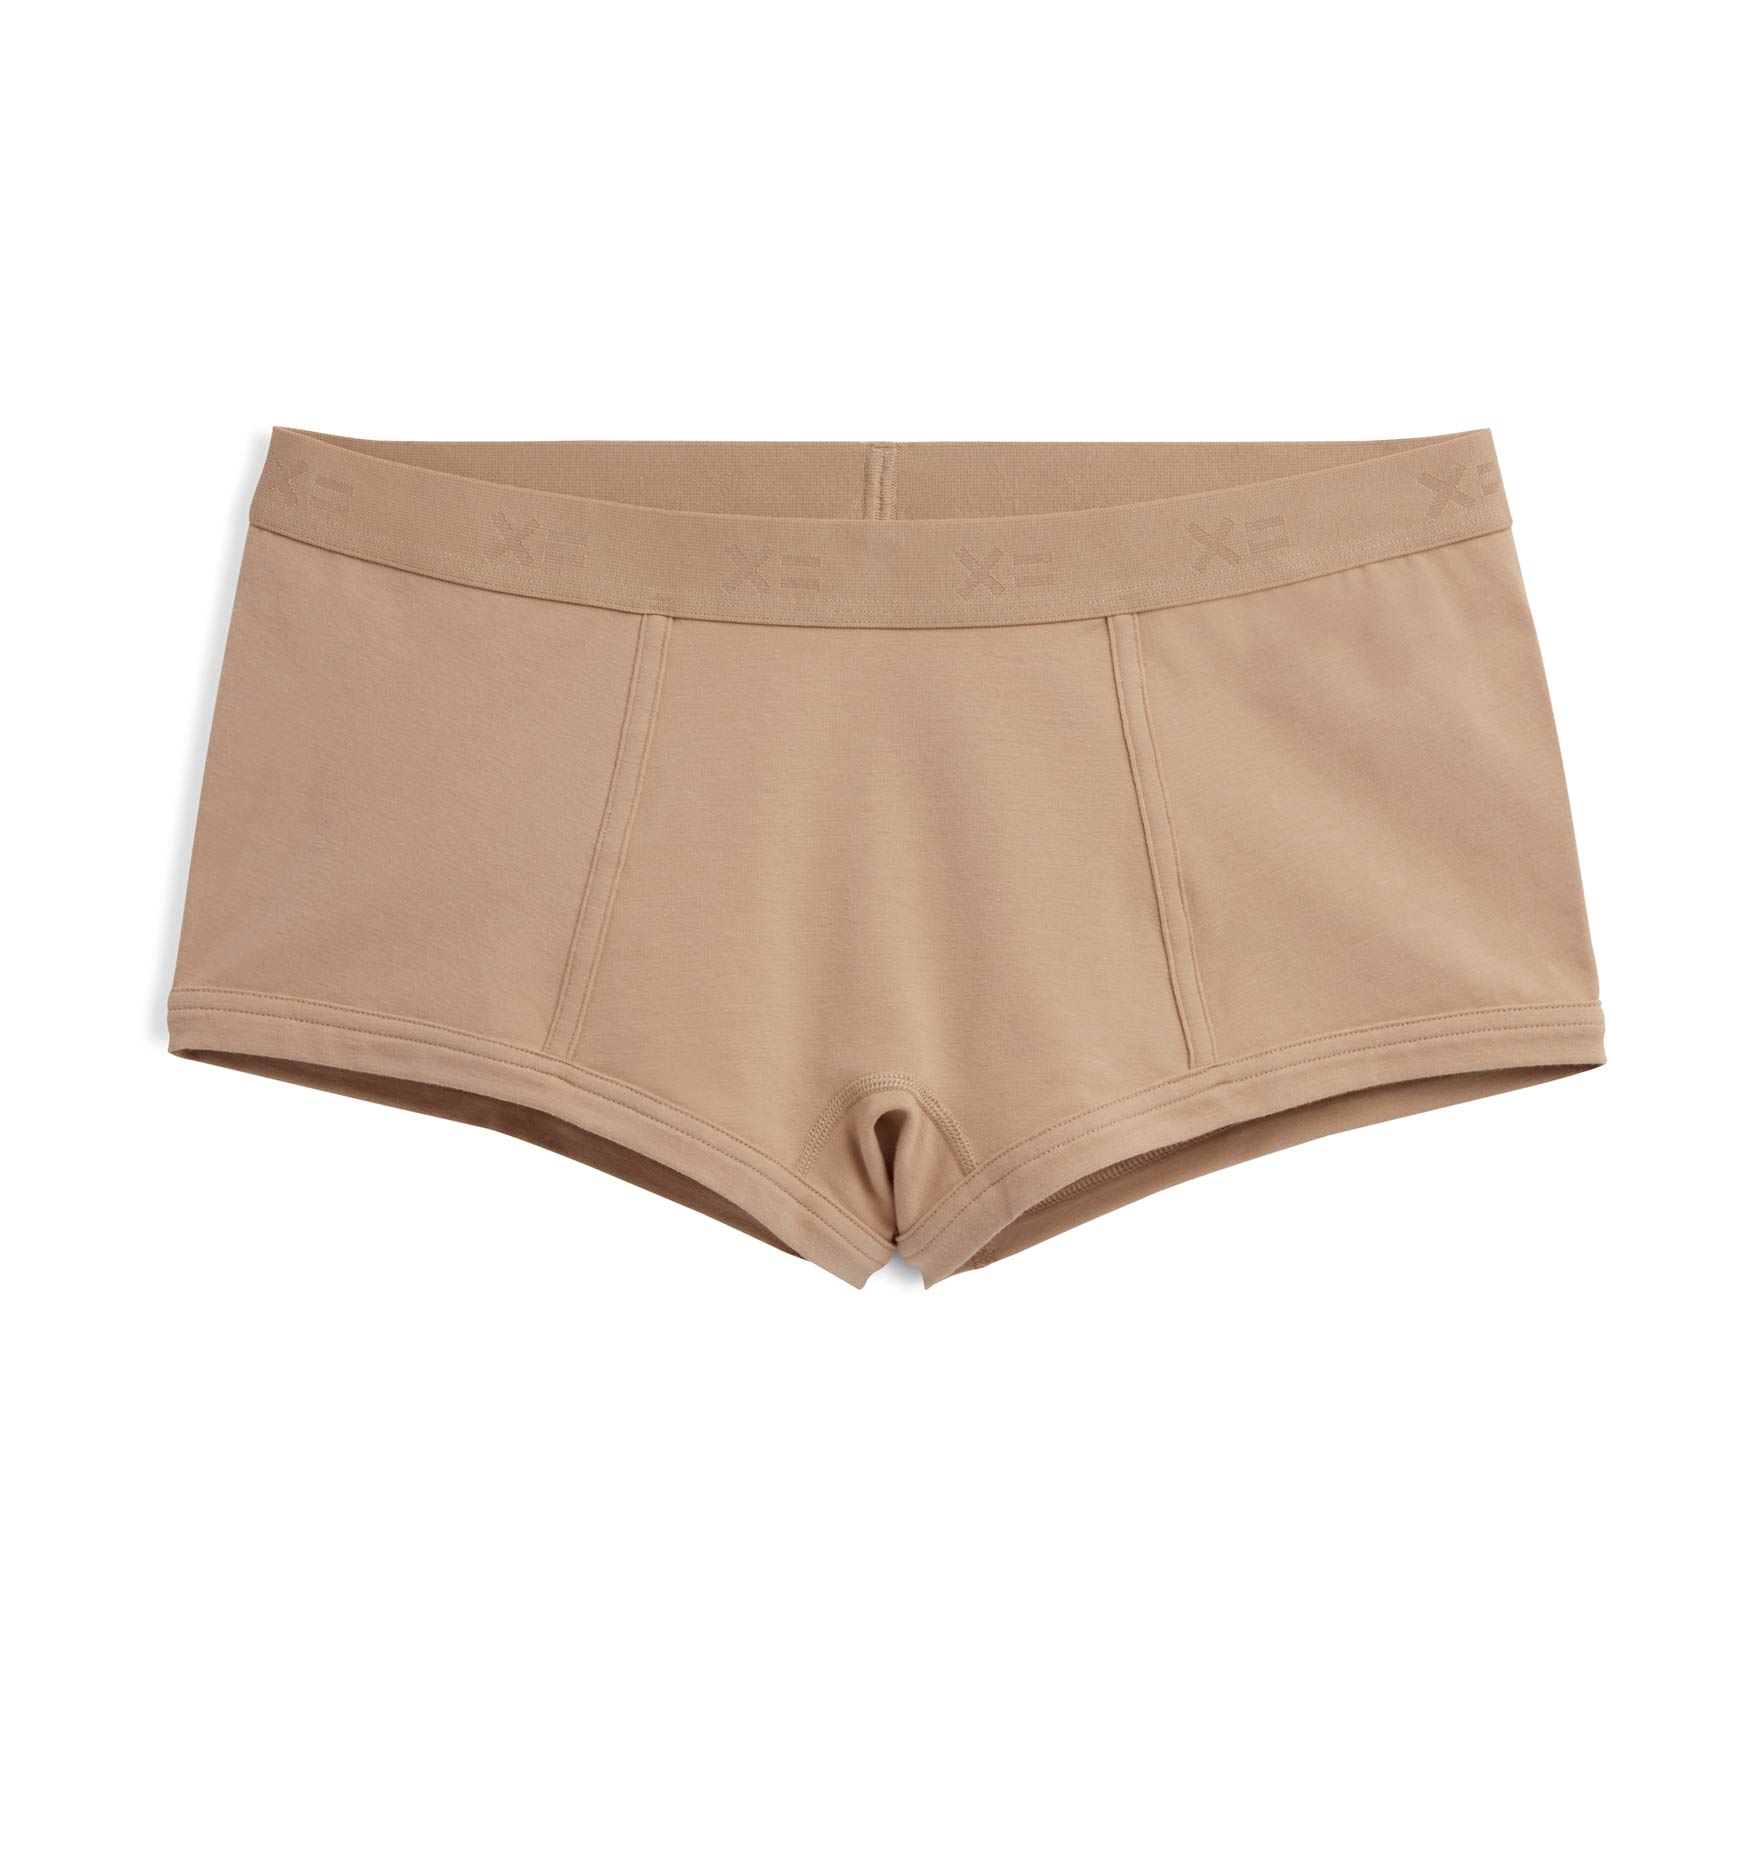 Boy Shorts Underwear - Cotton Boyshorts & TENCEL MicroModal